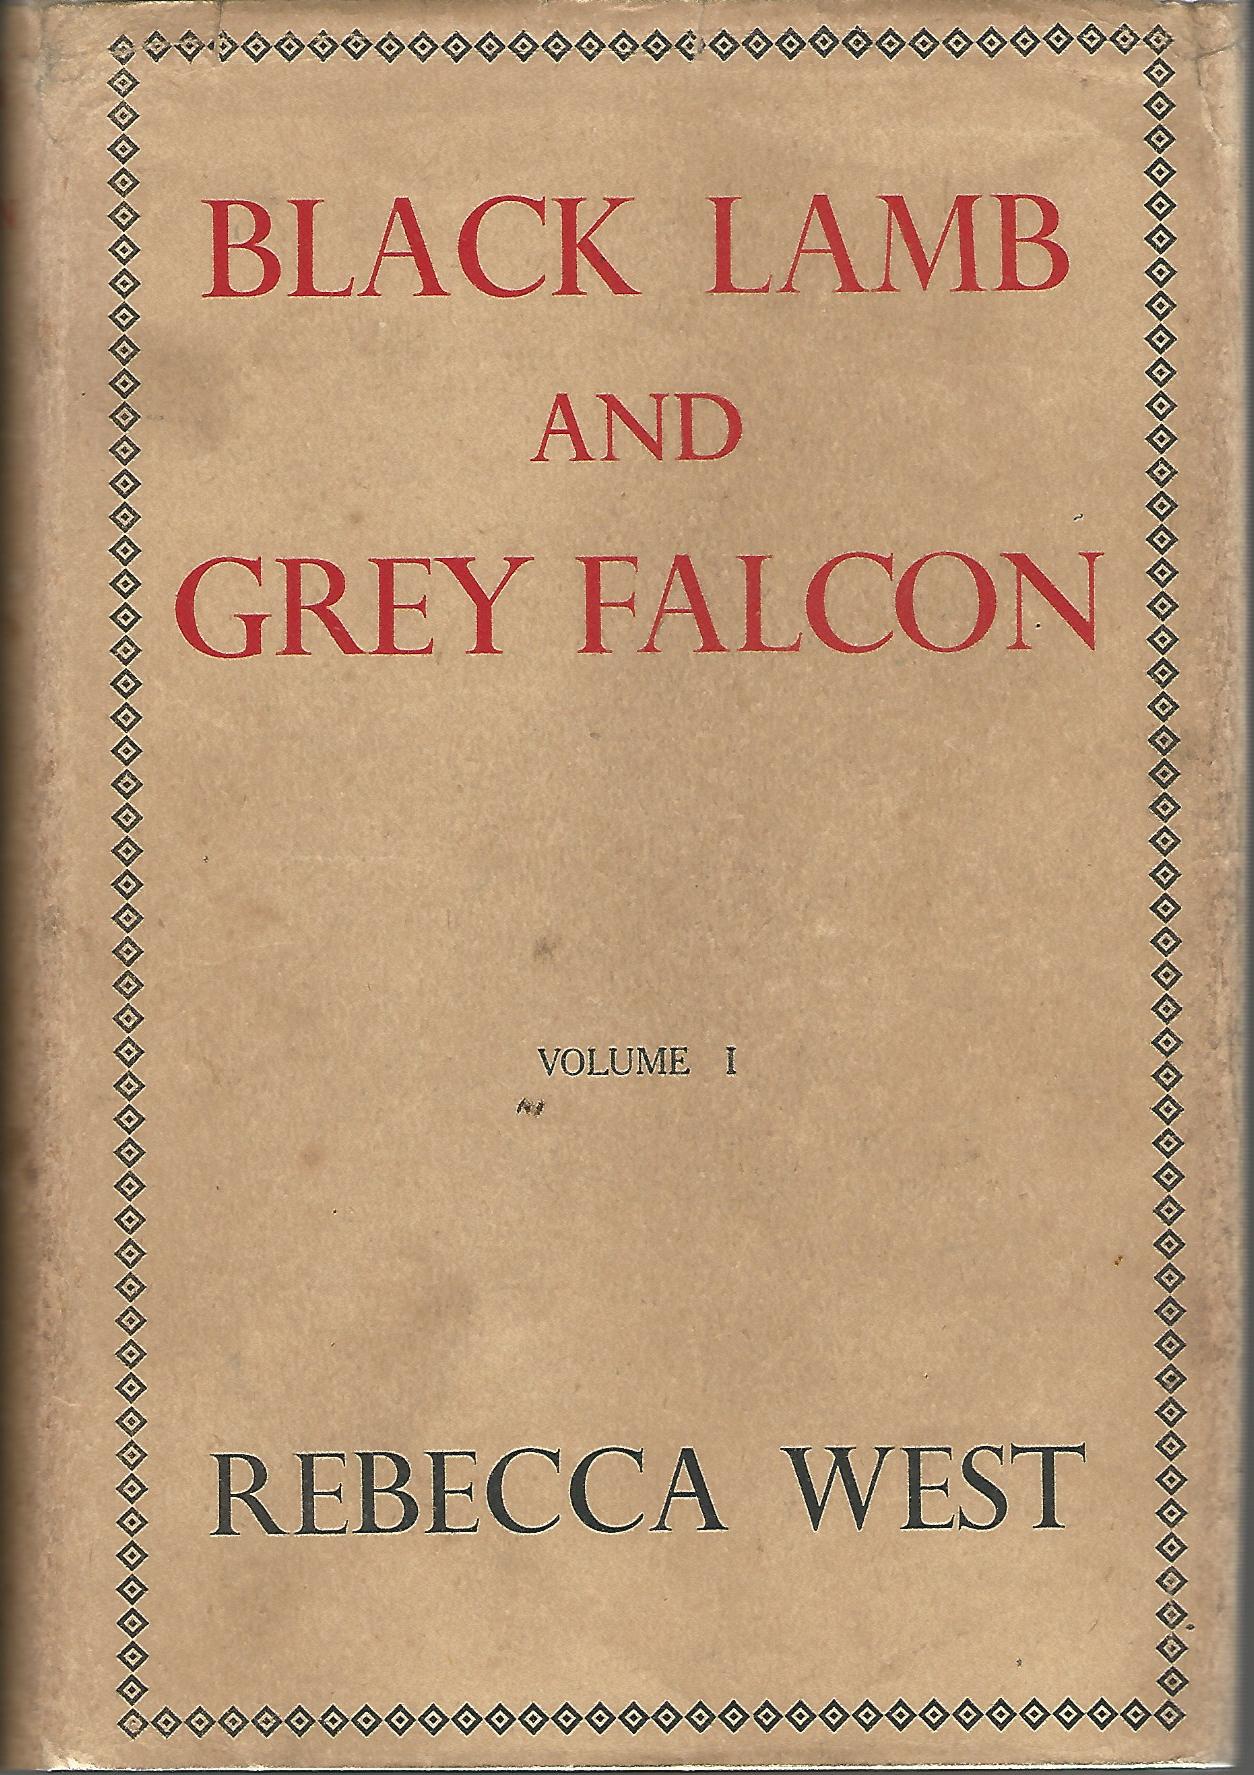 black lamb and gray falcon